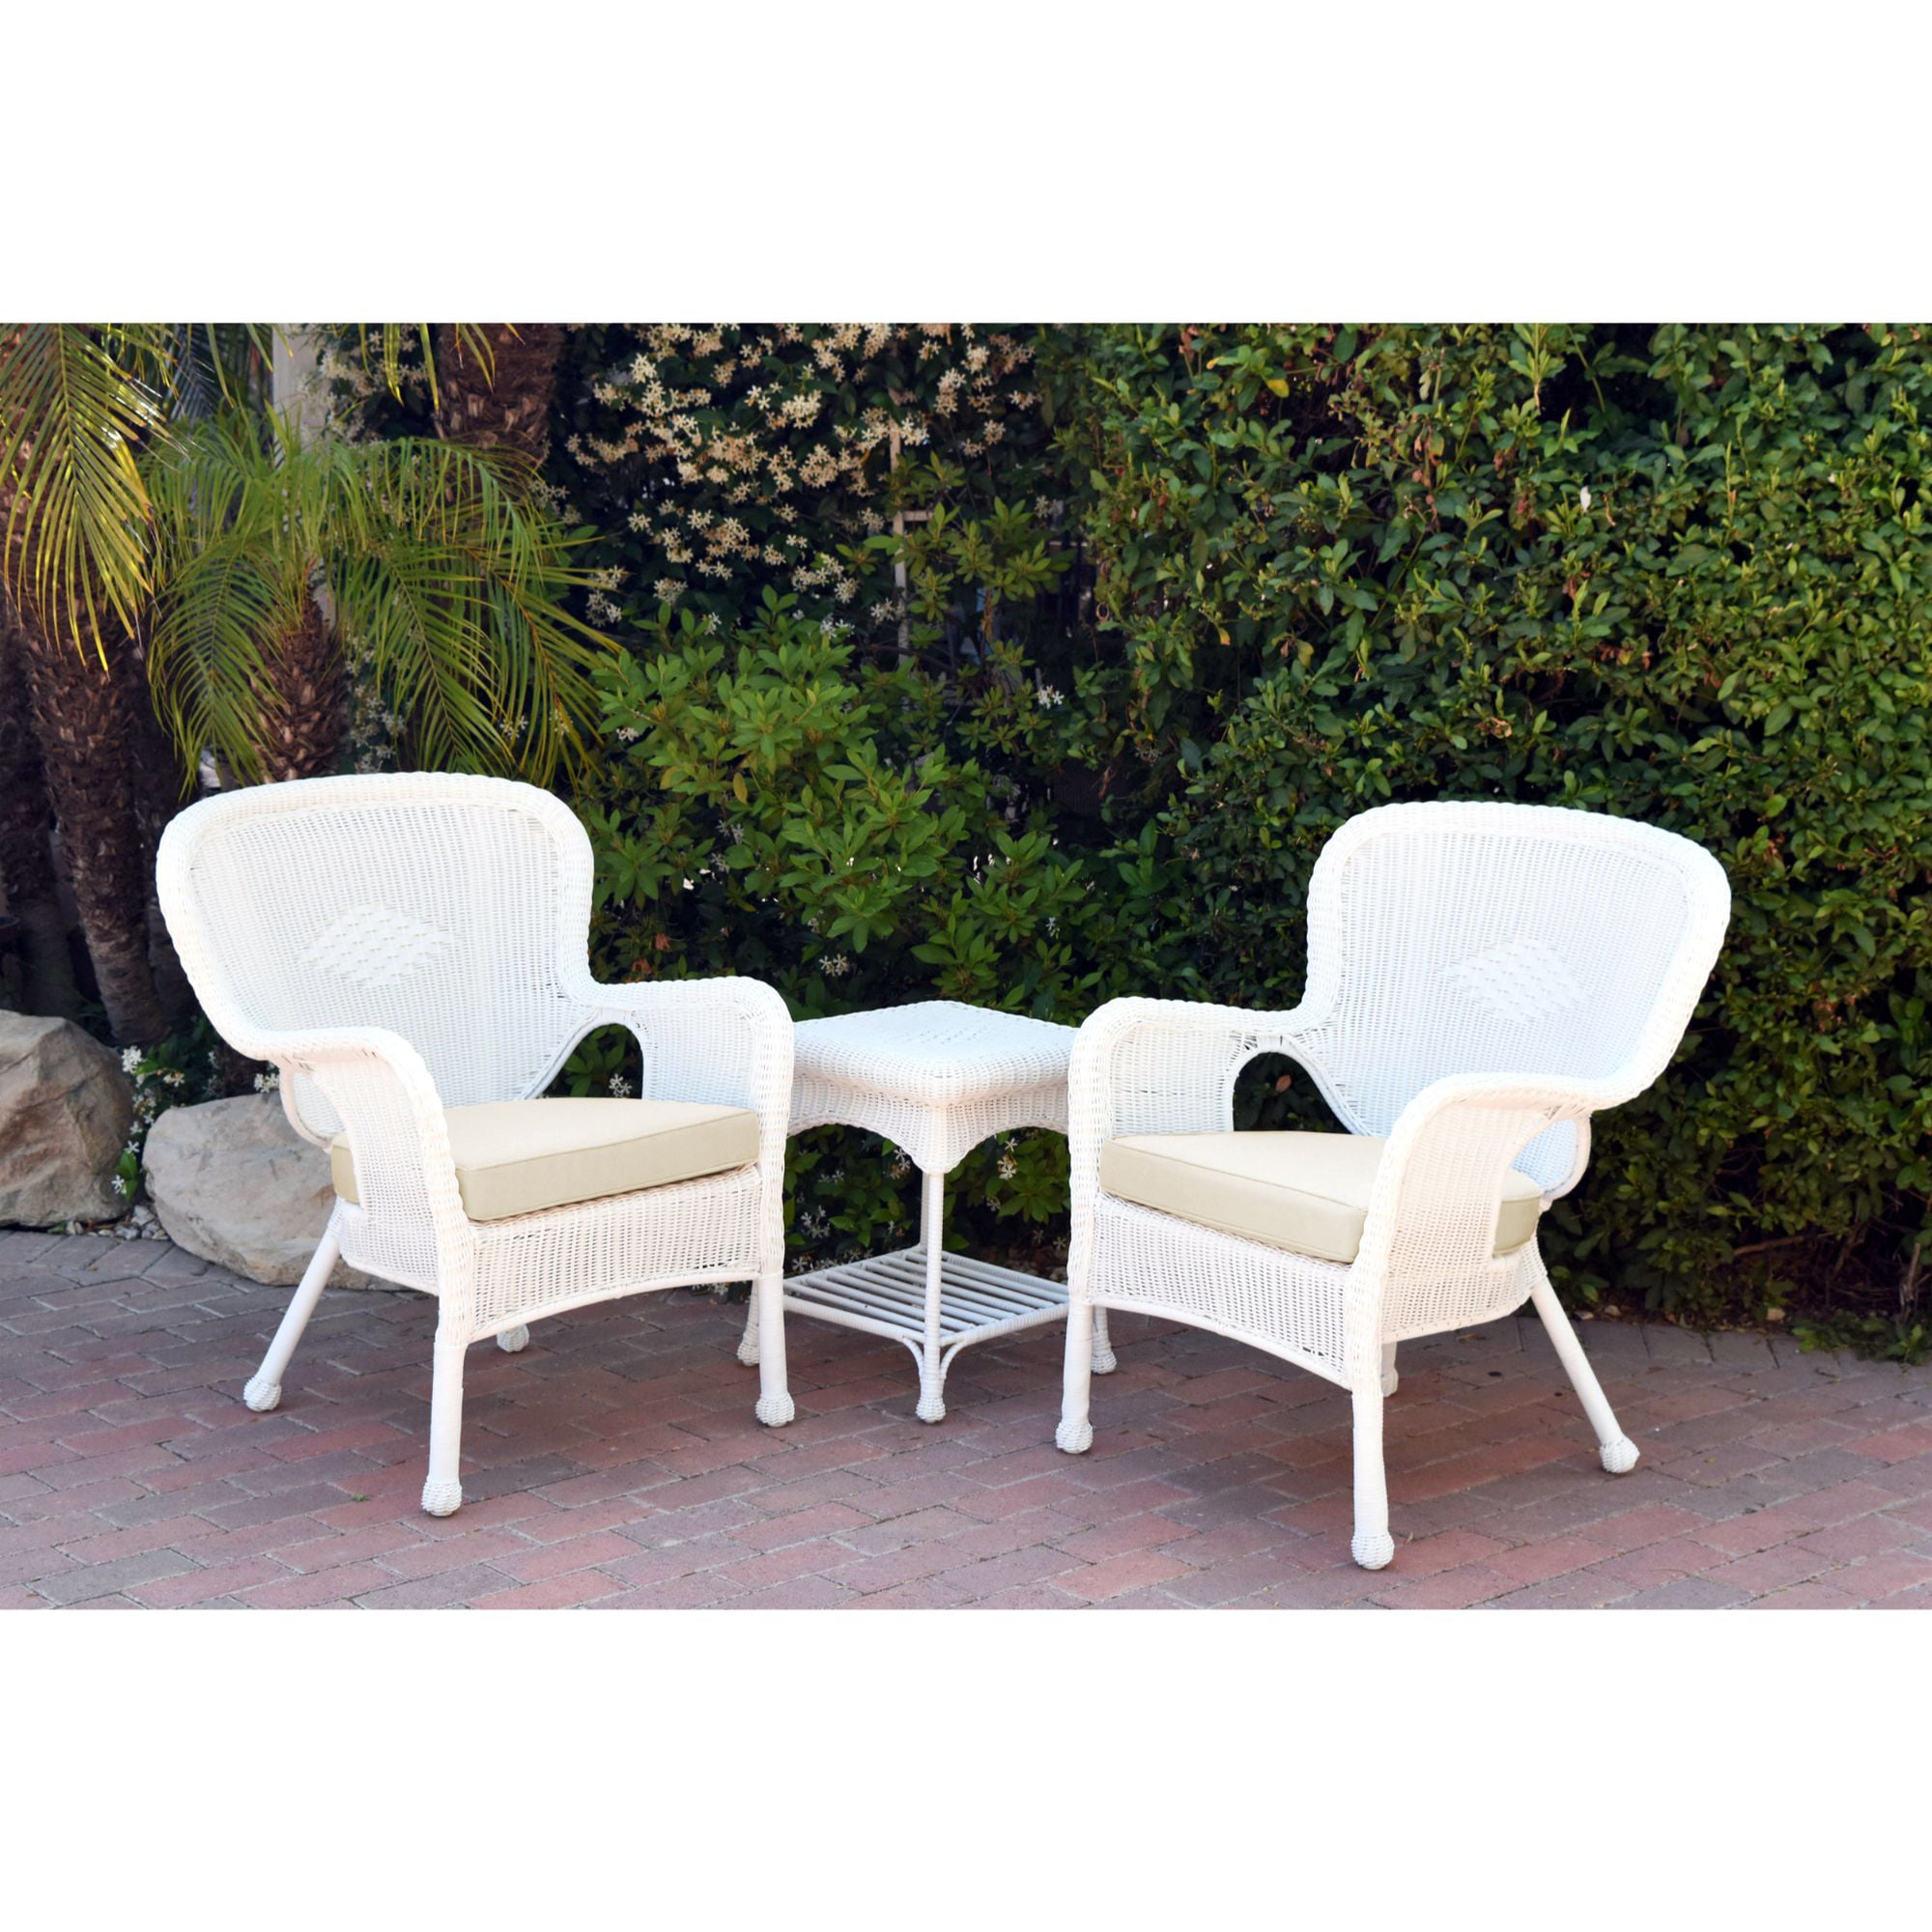 3-Piece White Wicker Outdoor Furniture Patio Conversation Set - Ivory